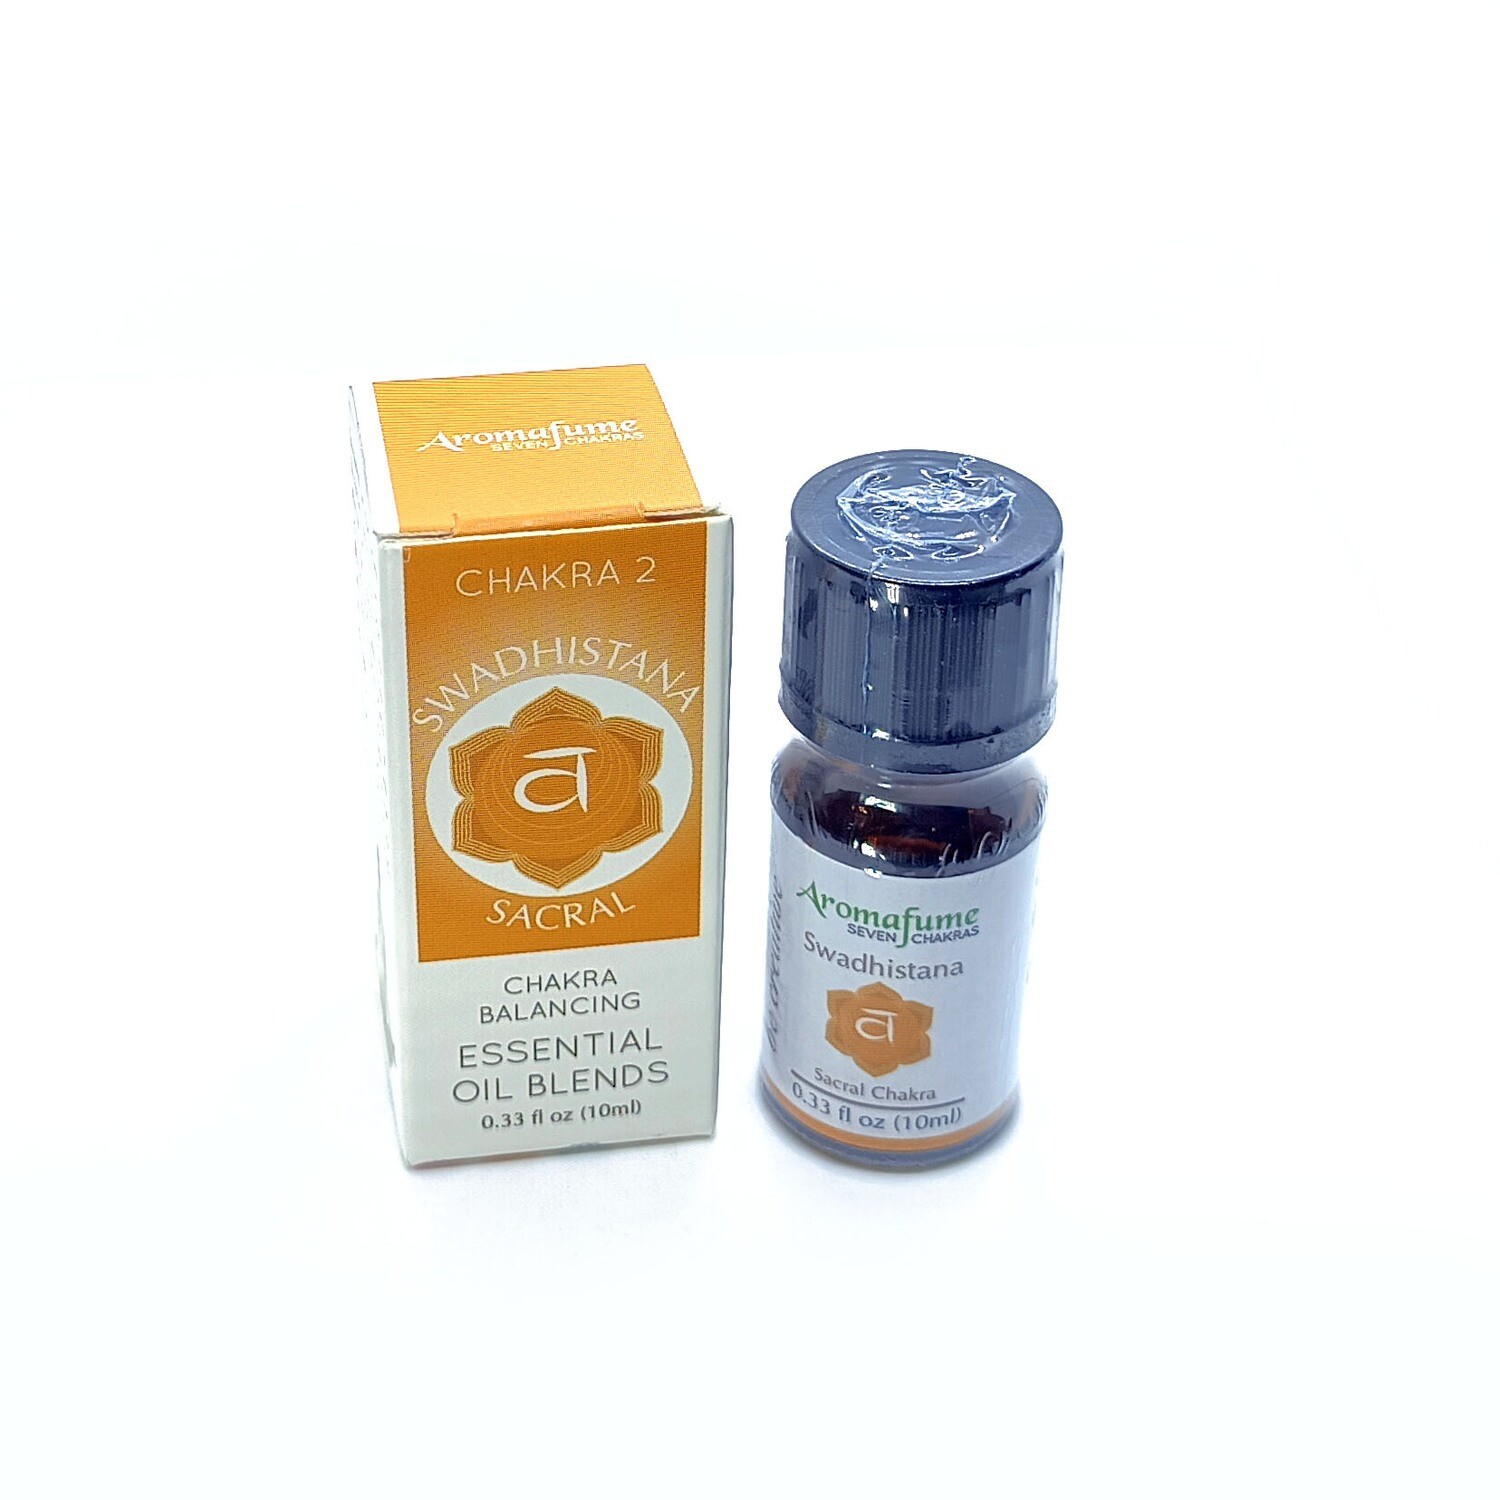 Aromafume Sacral Chakra Essential Oil (10ml)